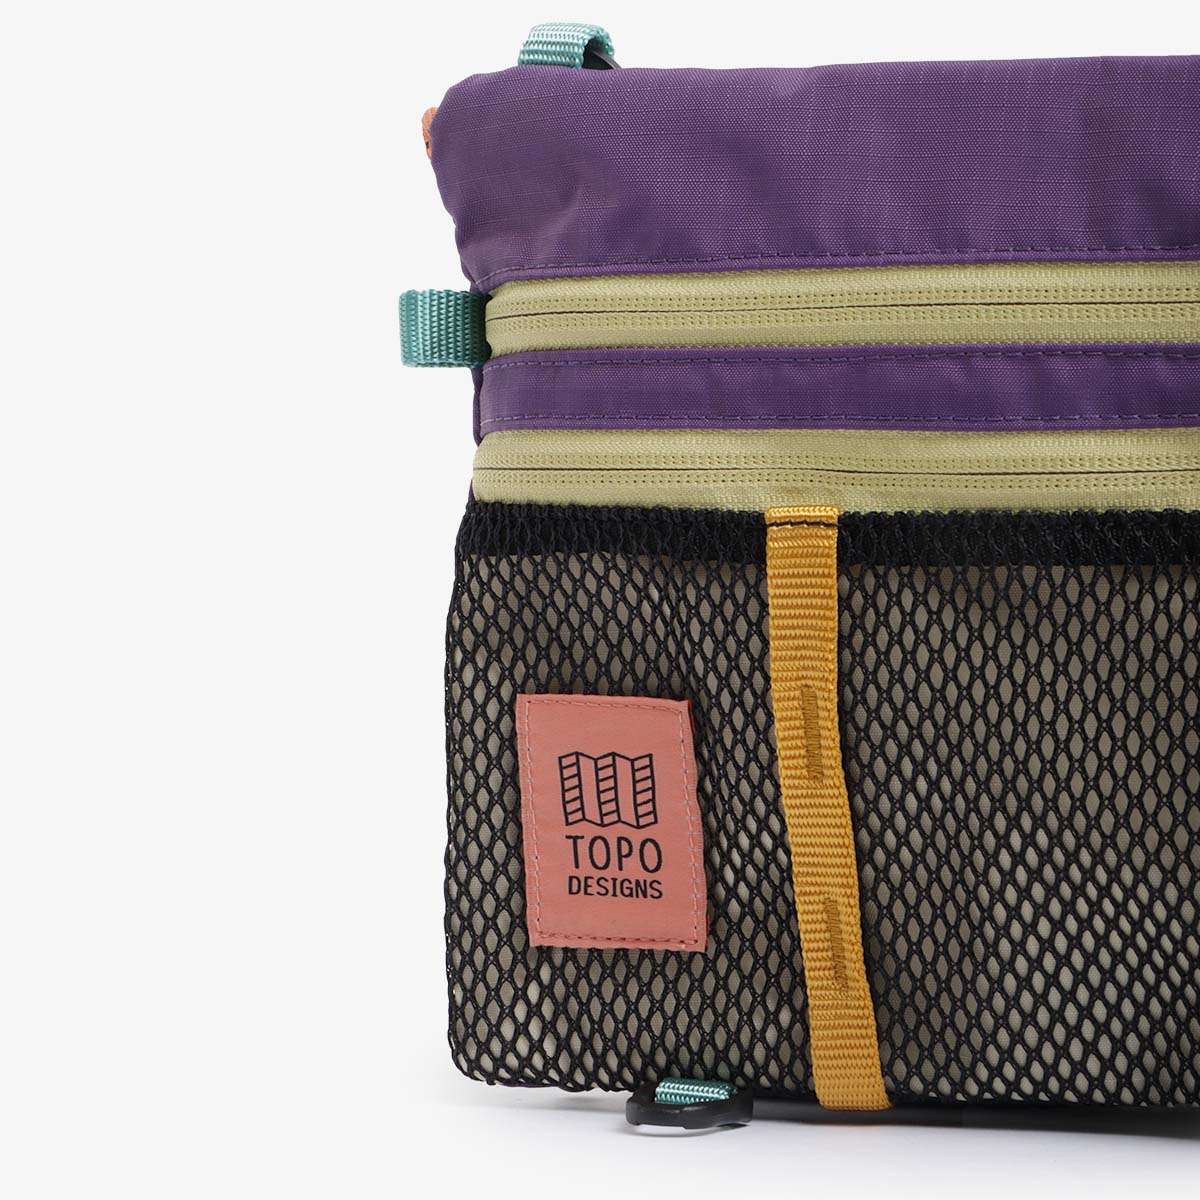 Topo Designs Mountain Accessory Shoulder Bag, Loganberry/Bone White, Detail Shot 2